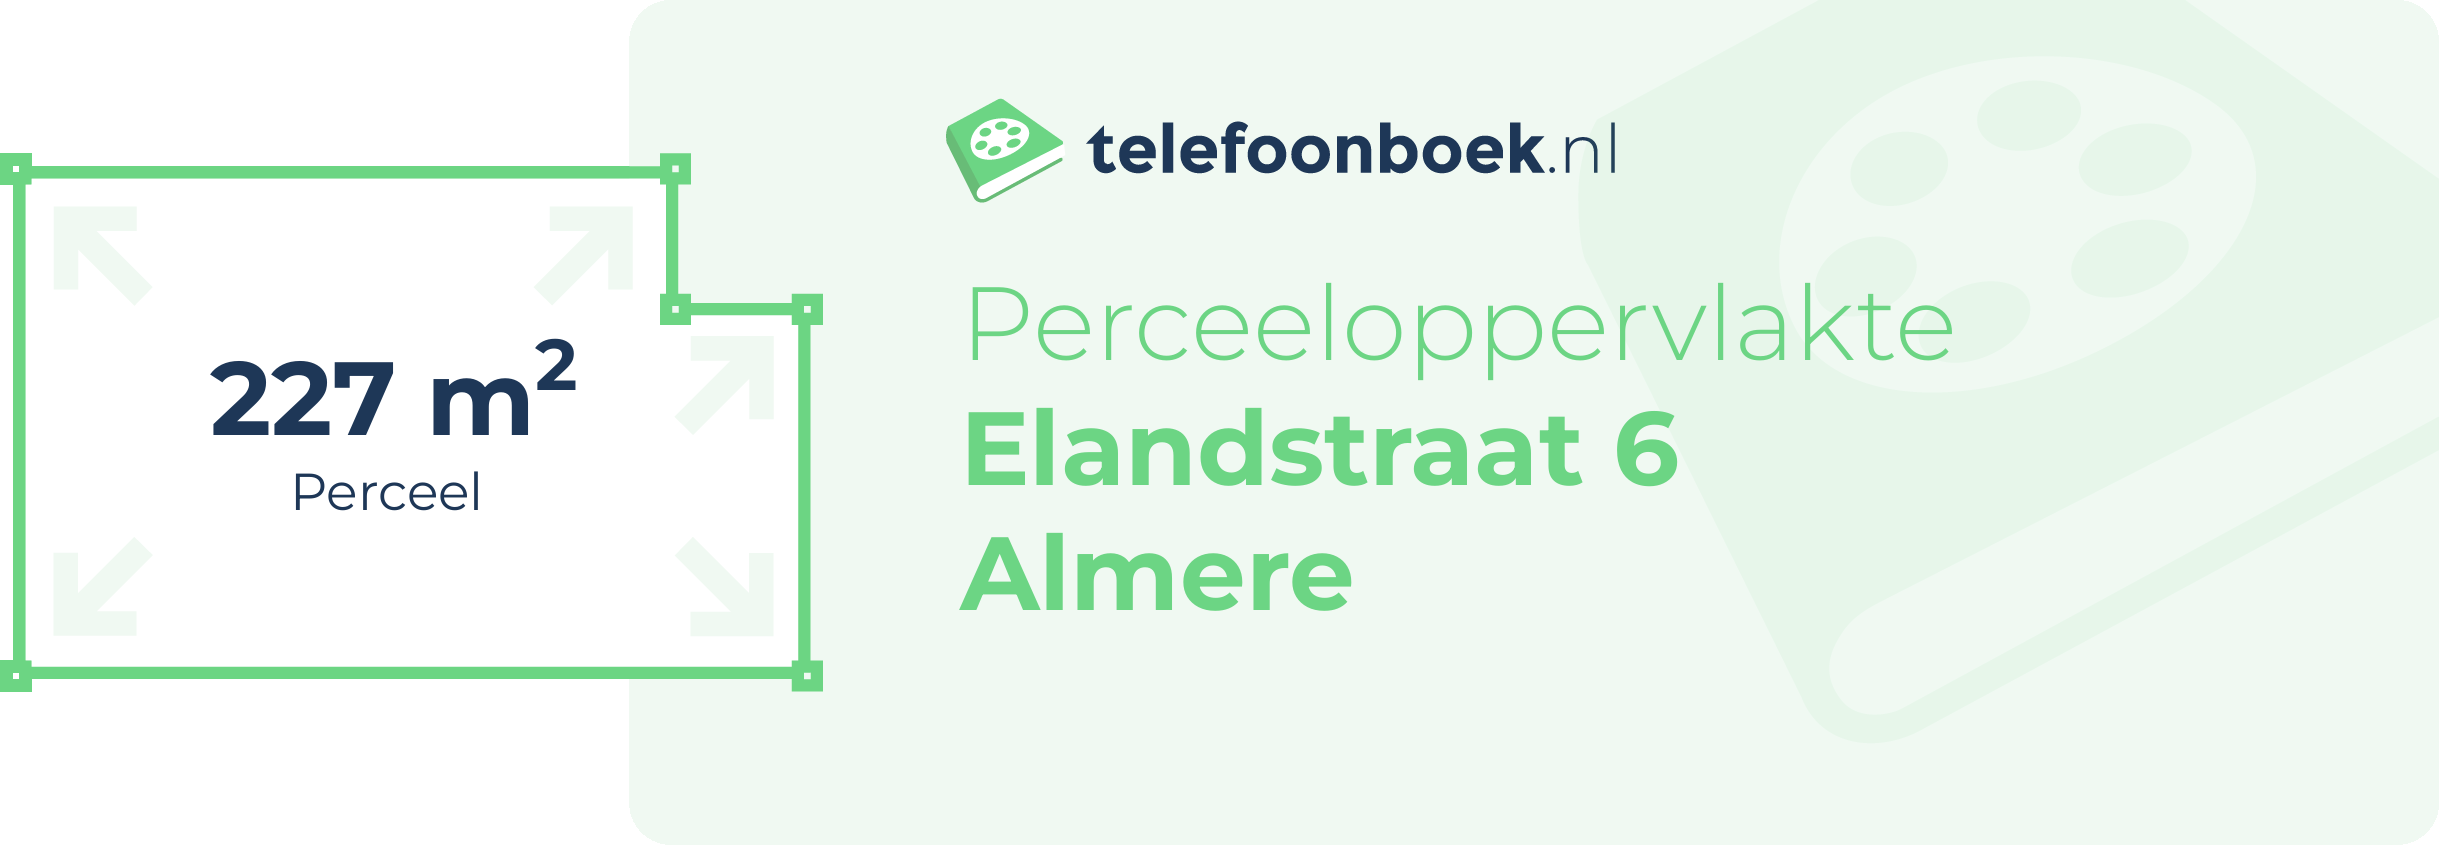 Perceeloppervlakte Elandstraat 6 Almere